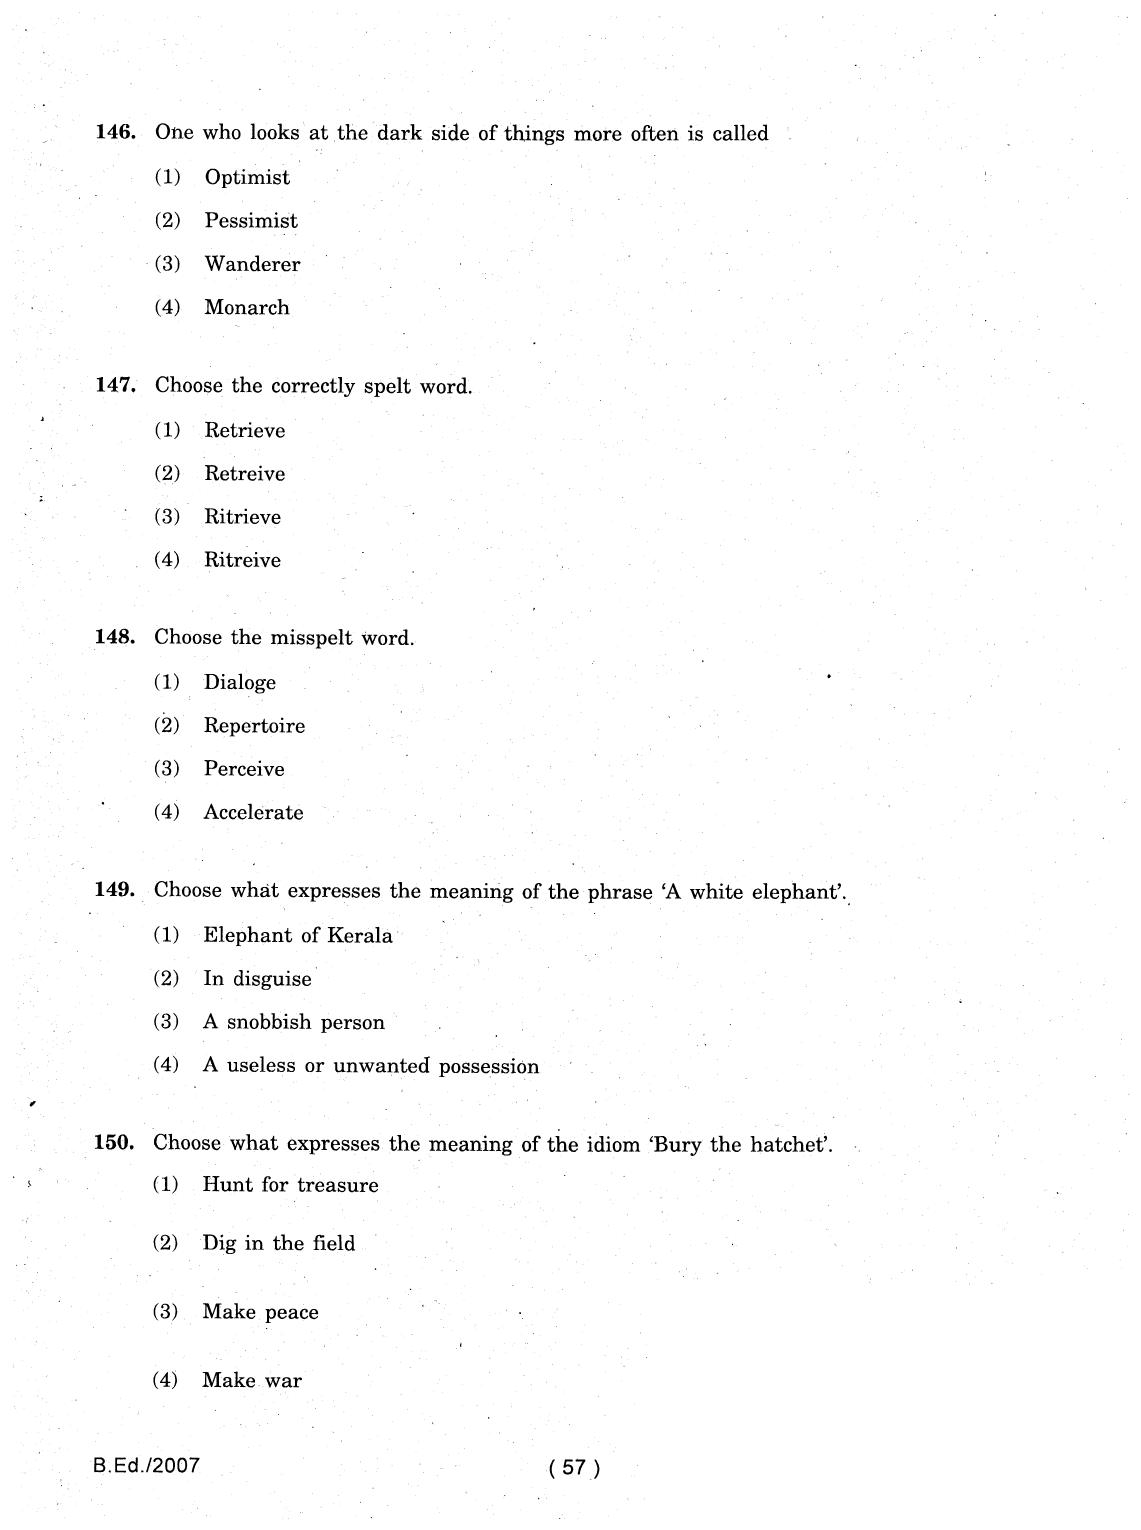 IGNOU B.Ed 2007 Question Paper - Page 57